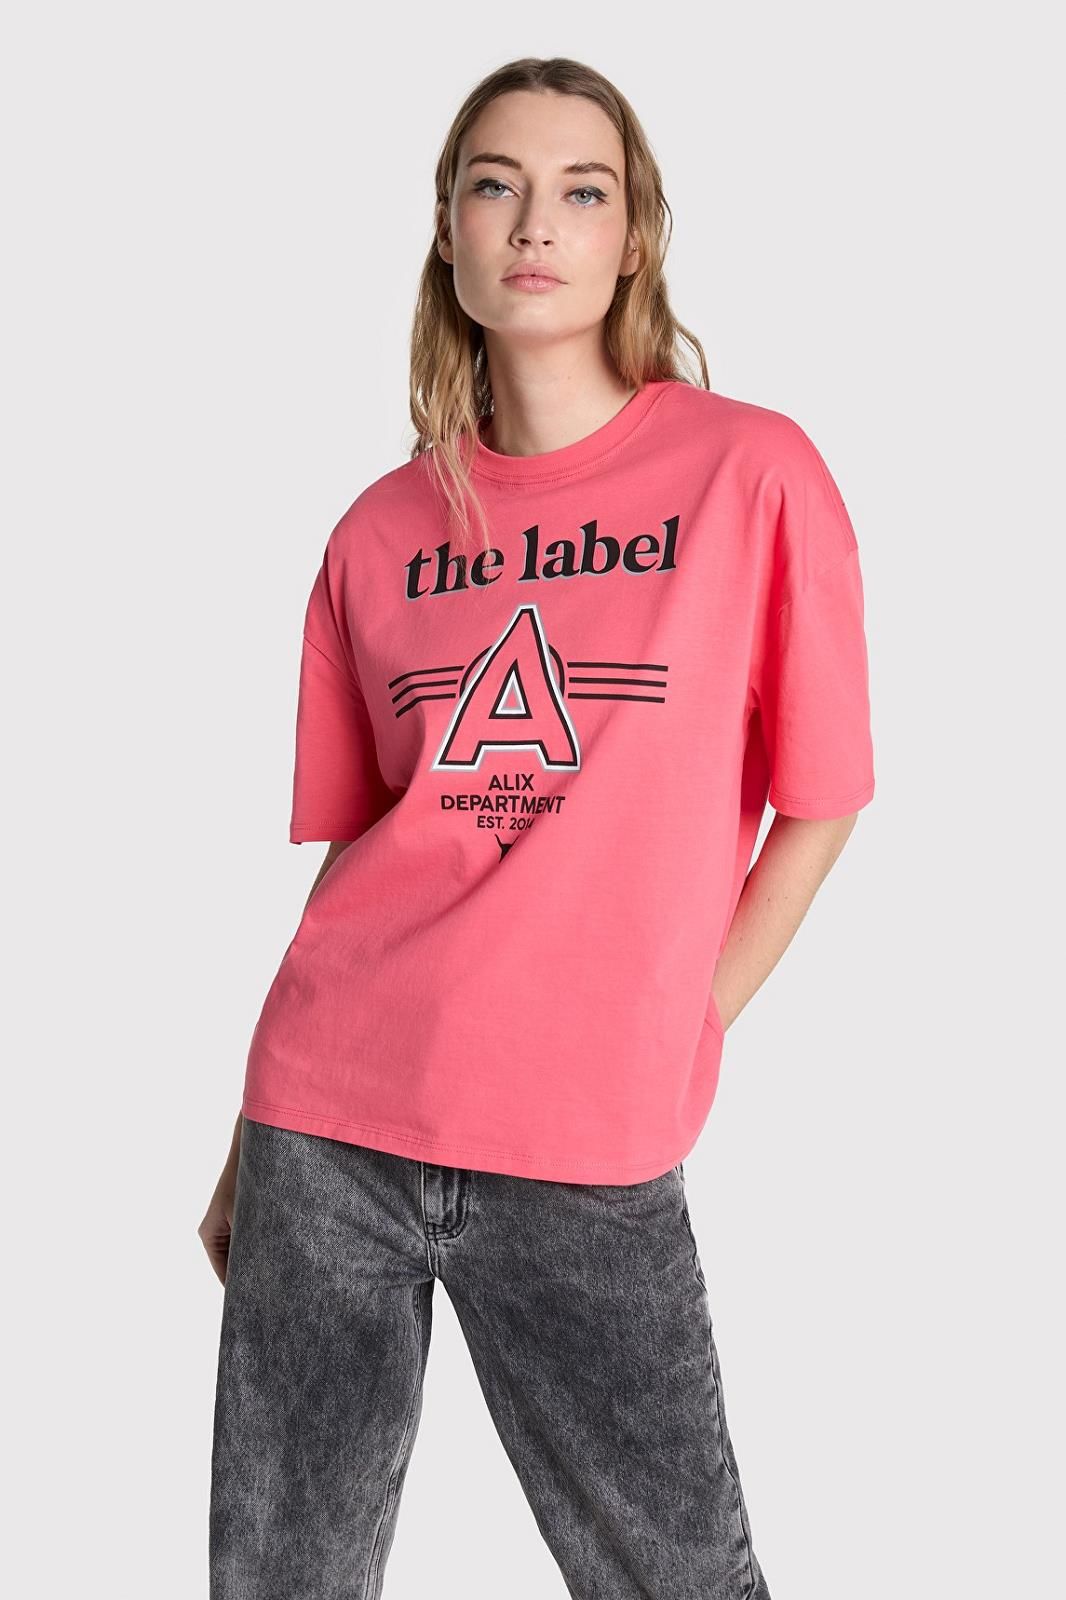 Alix The Label tee-Shirt Corail femmes (Tee - 2621 A noir) - Marine | Much more than shoes